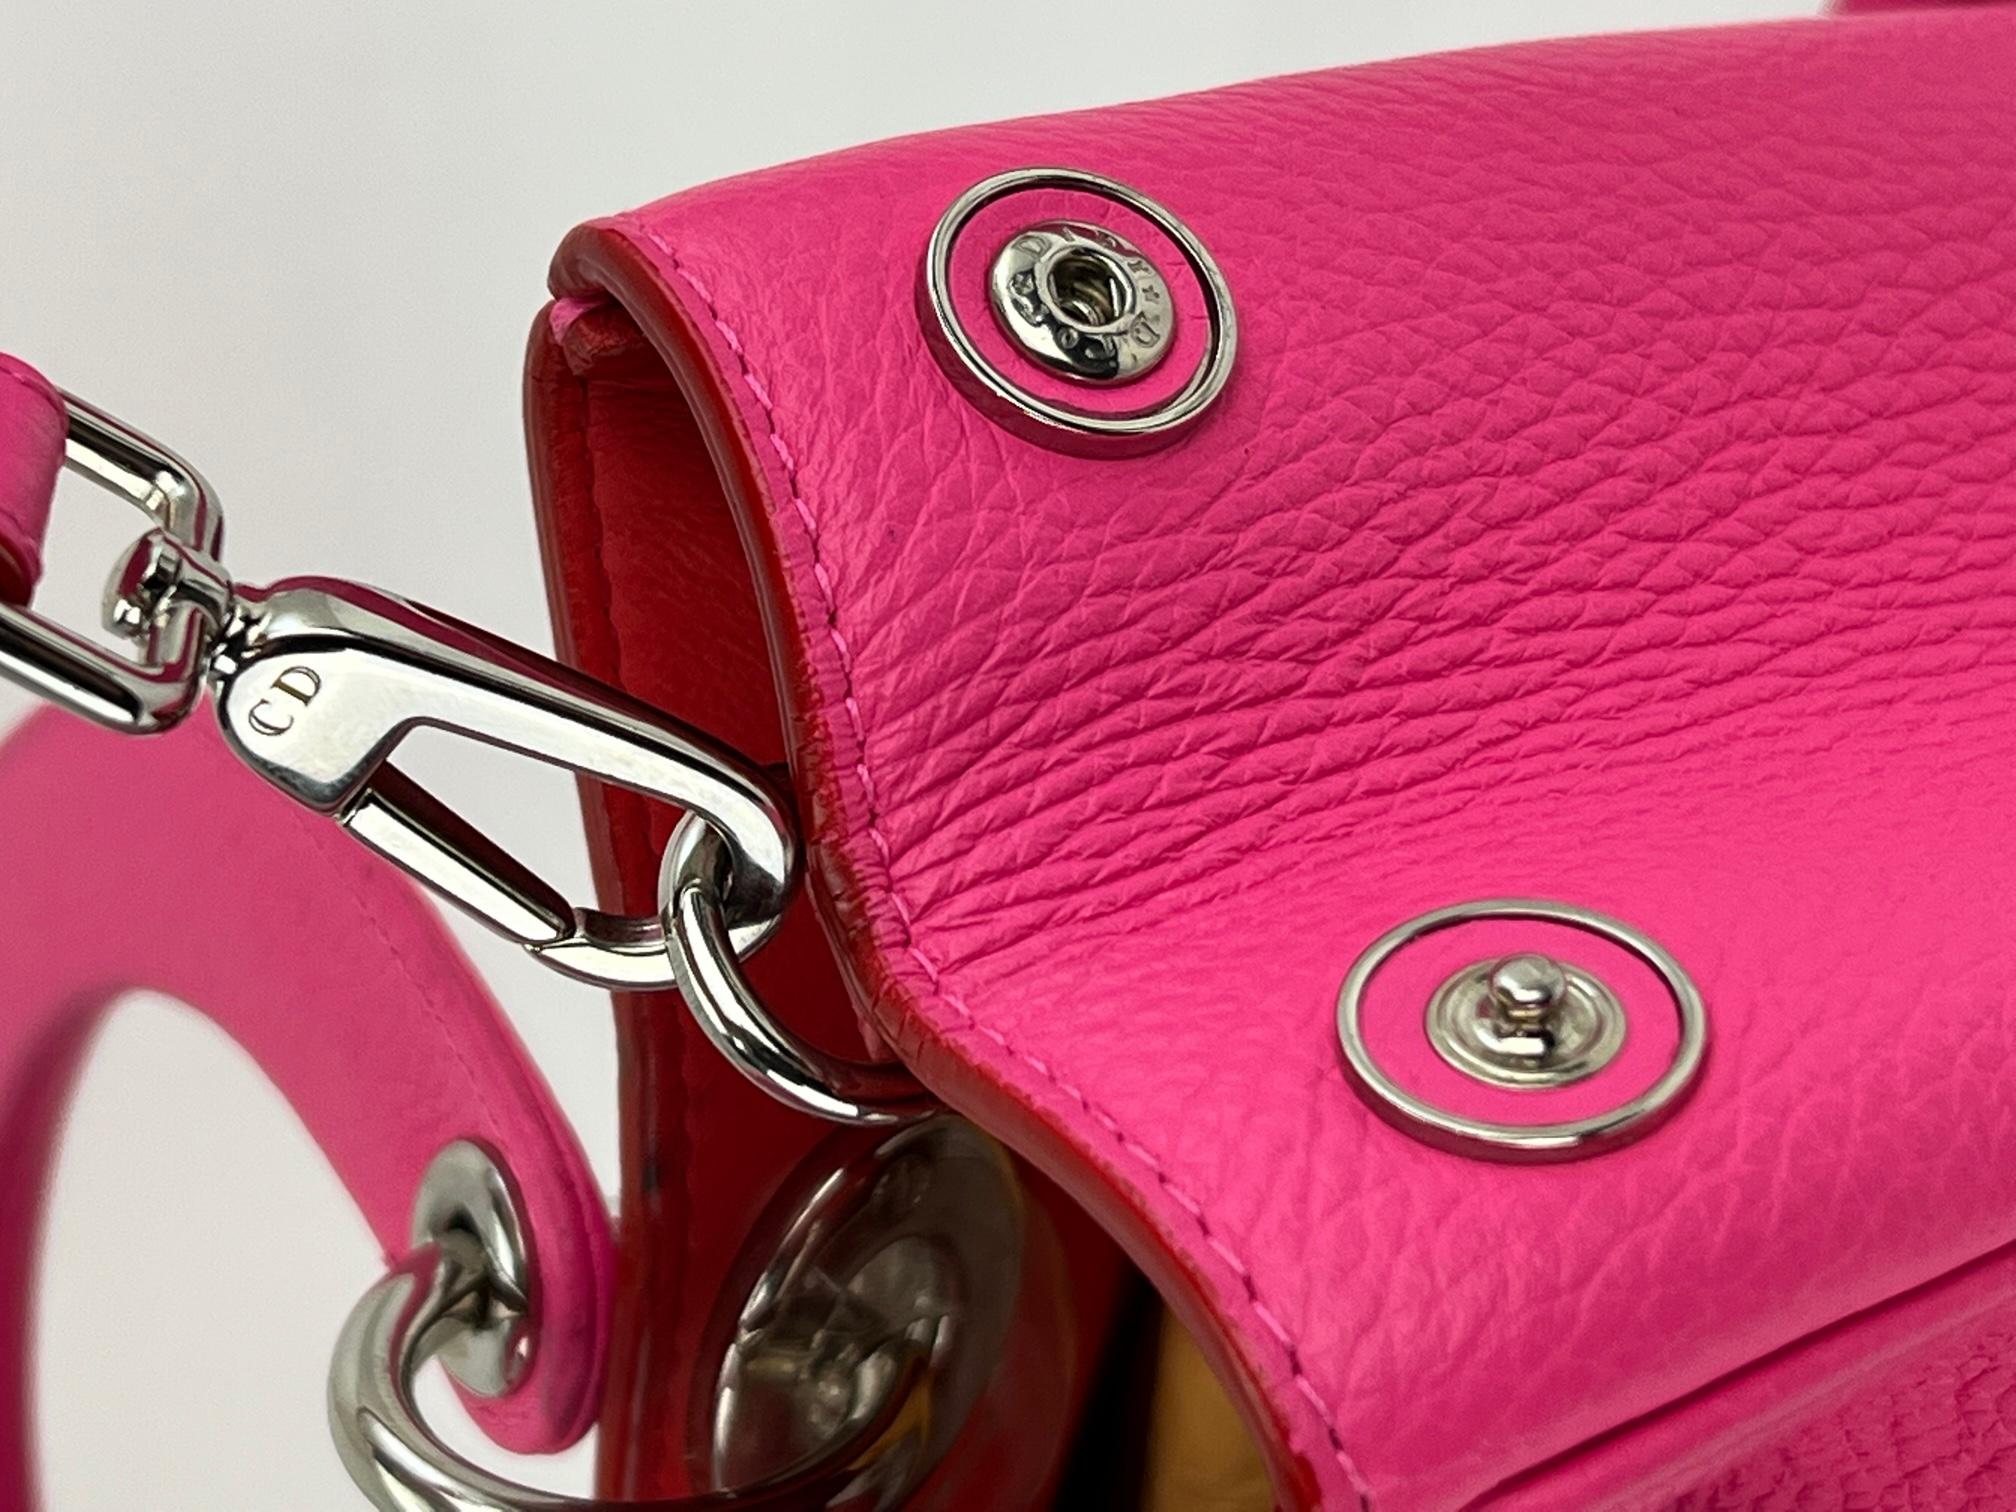 diorissimo pink bag